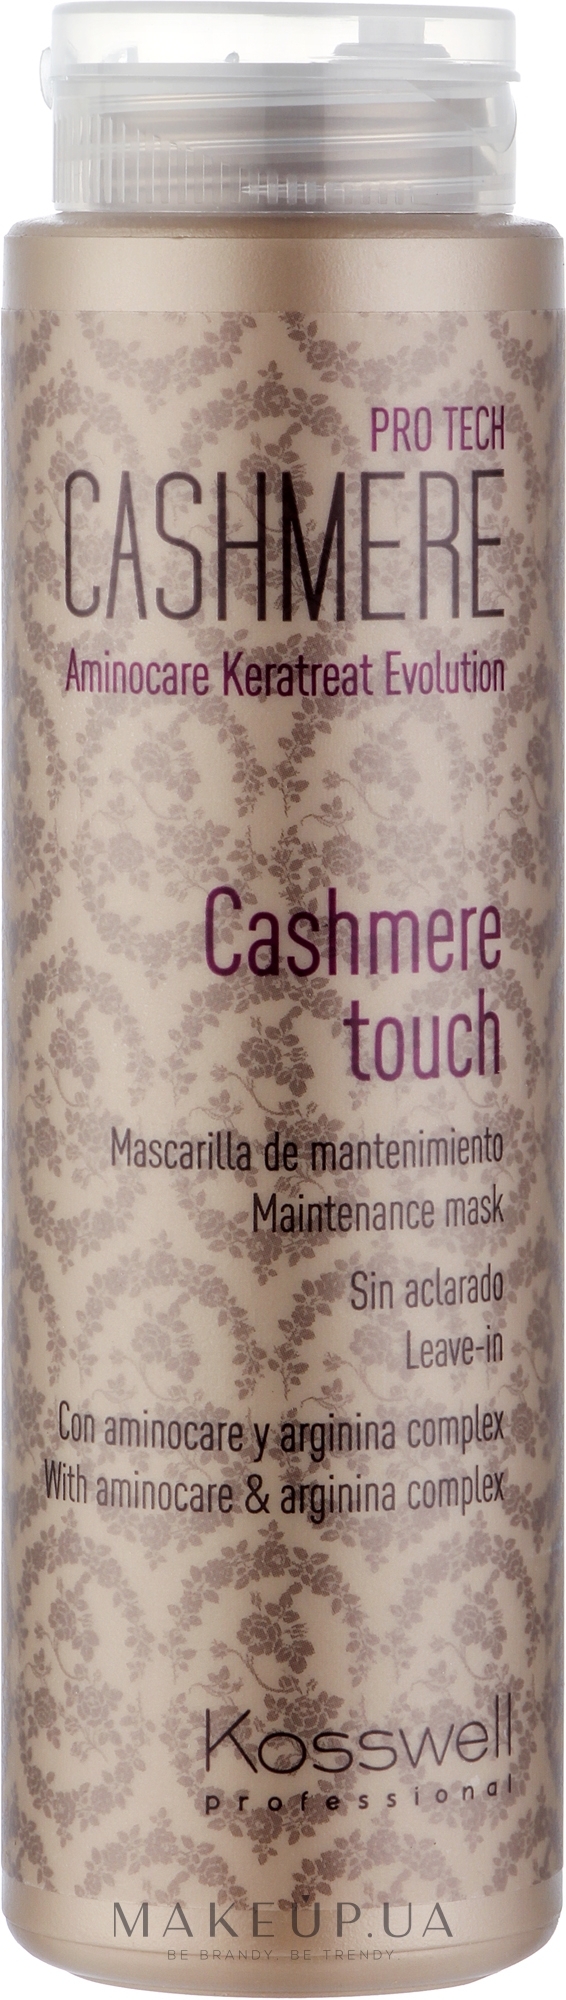 Маска для гладкости волос несмываемая - Kosswell Professional Cashmere Touch — фото 250ml